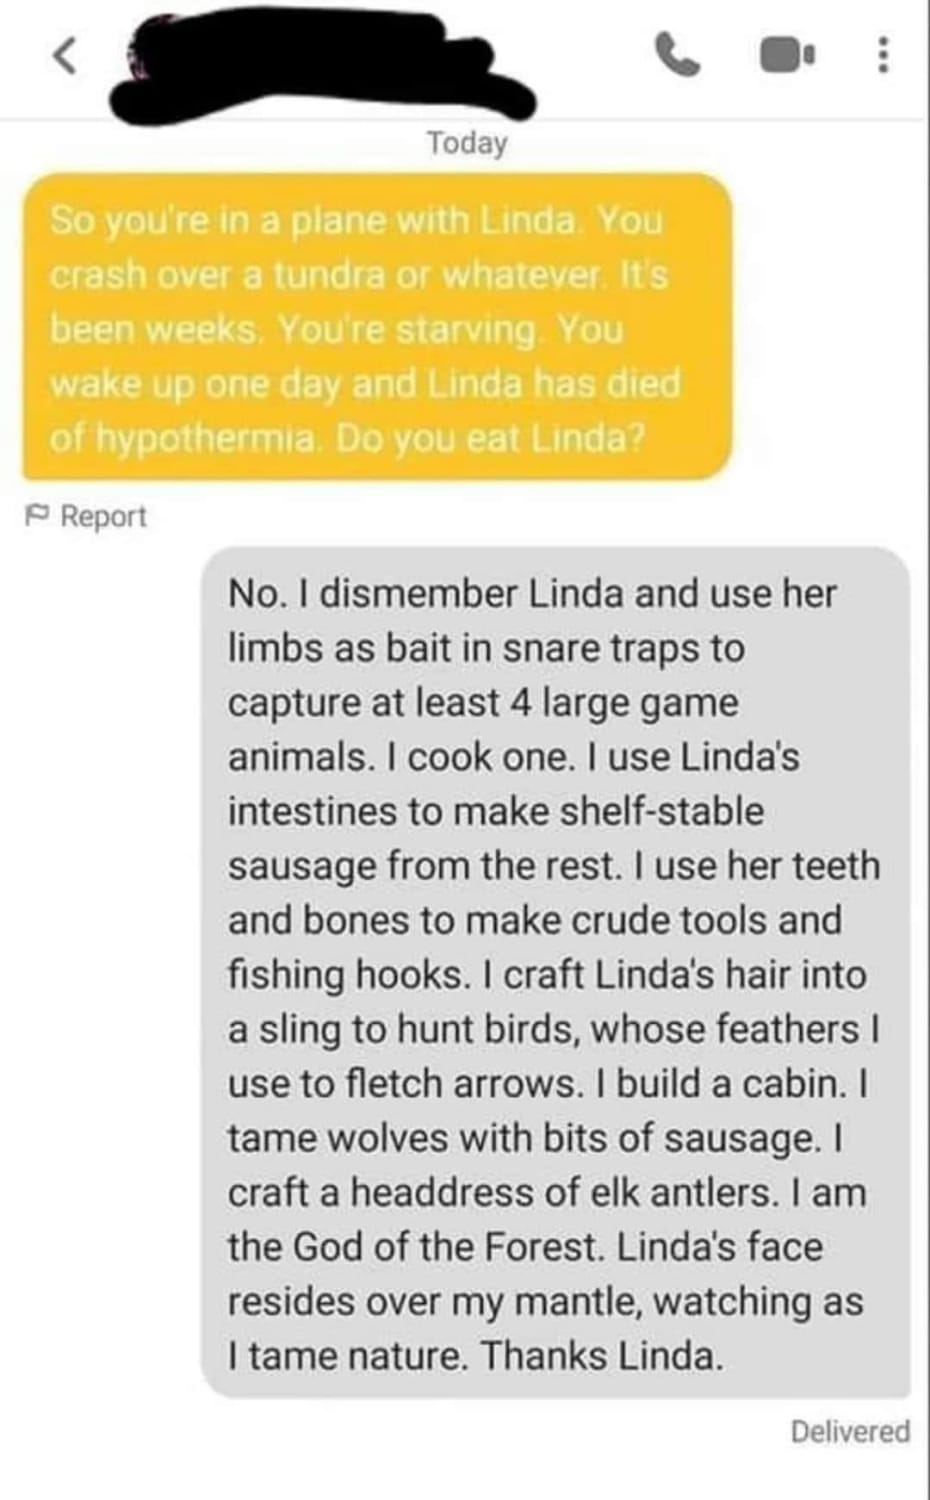 Thank you Linda